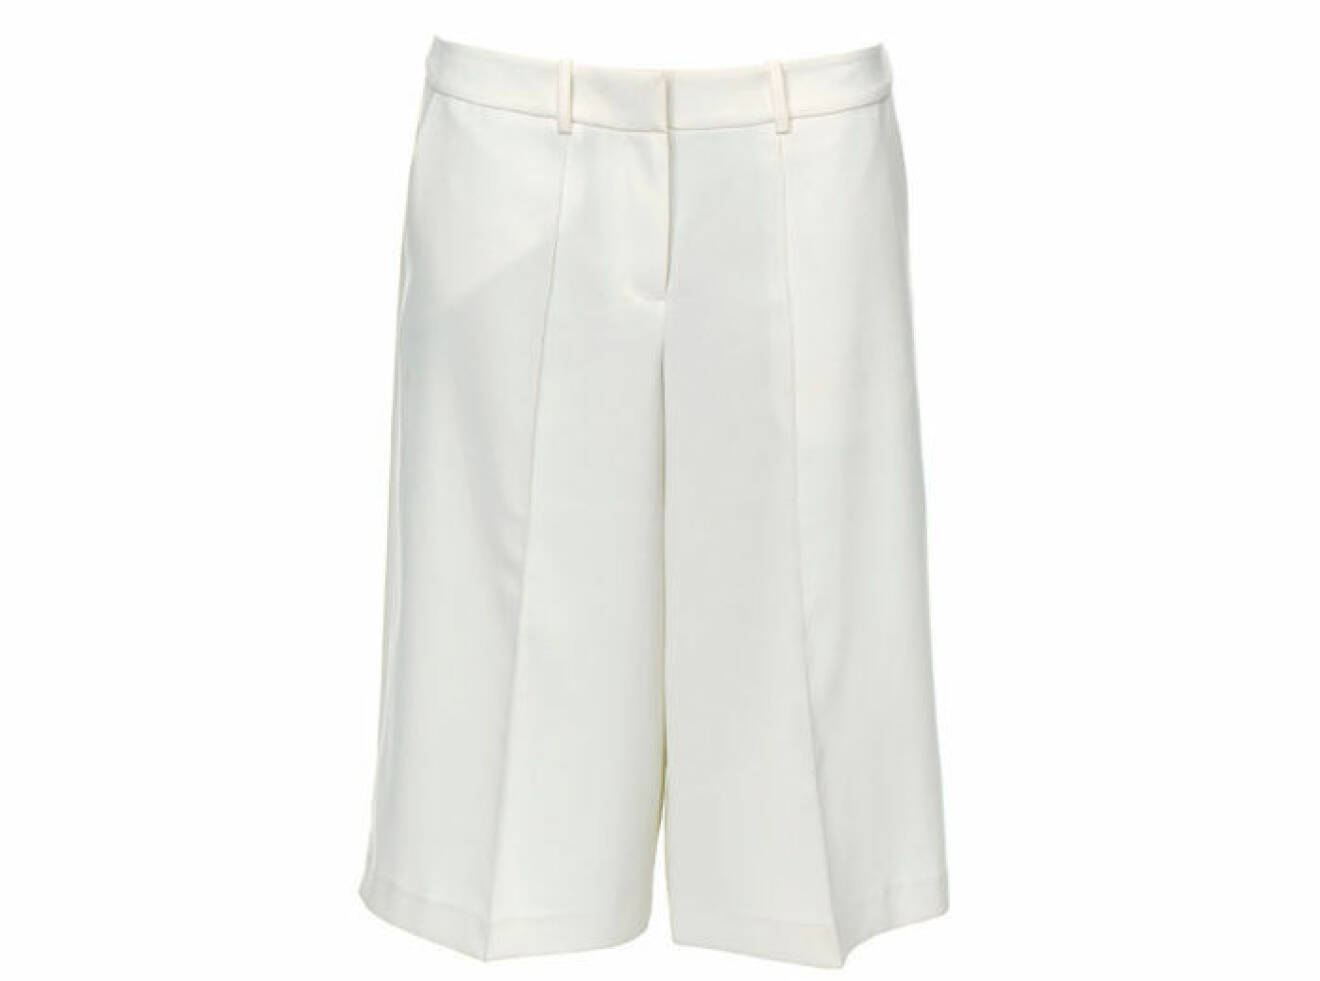 Långa shorts i polyester,  stl 34–42, 1 499 kr, Stylein.